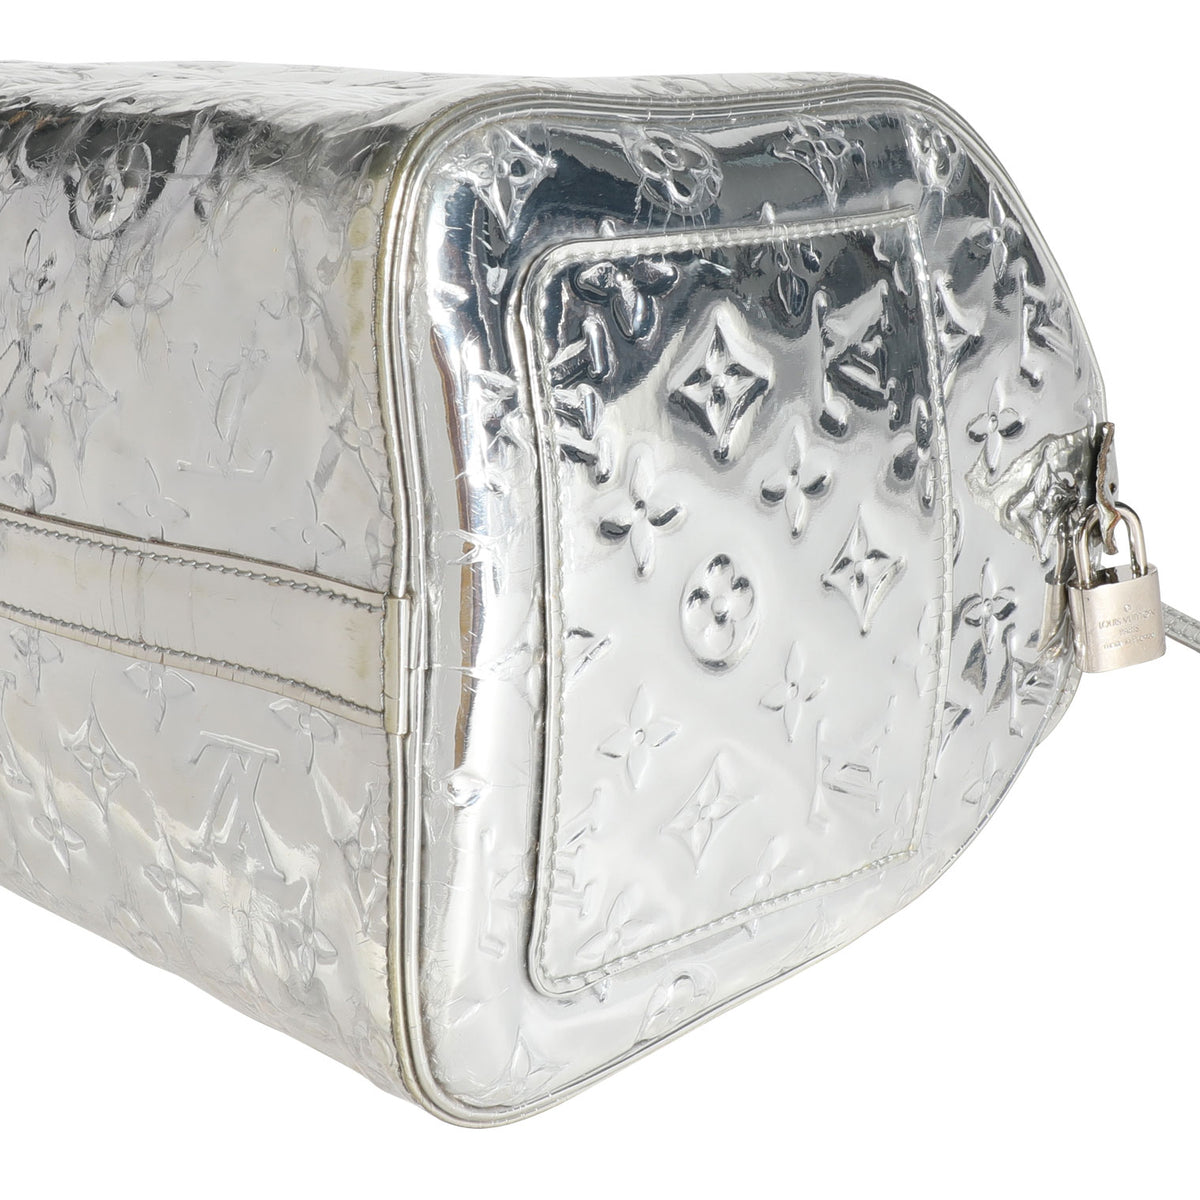 Louis Vuitton Limited Edition Silver Monogram Miroir Speedy 35 Bag